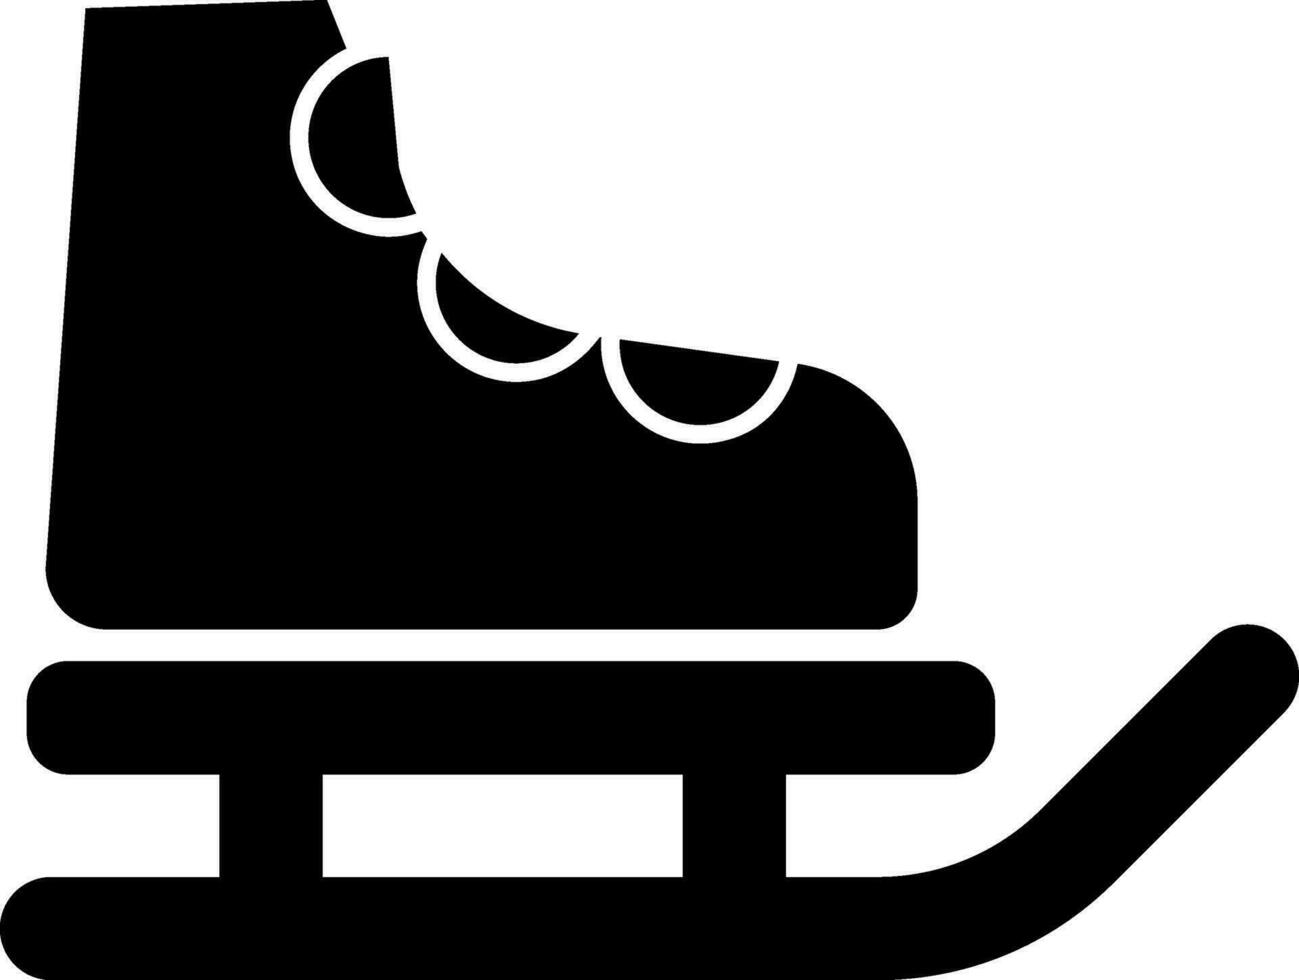 Ice skate shoe glyph icon. vector